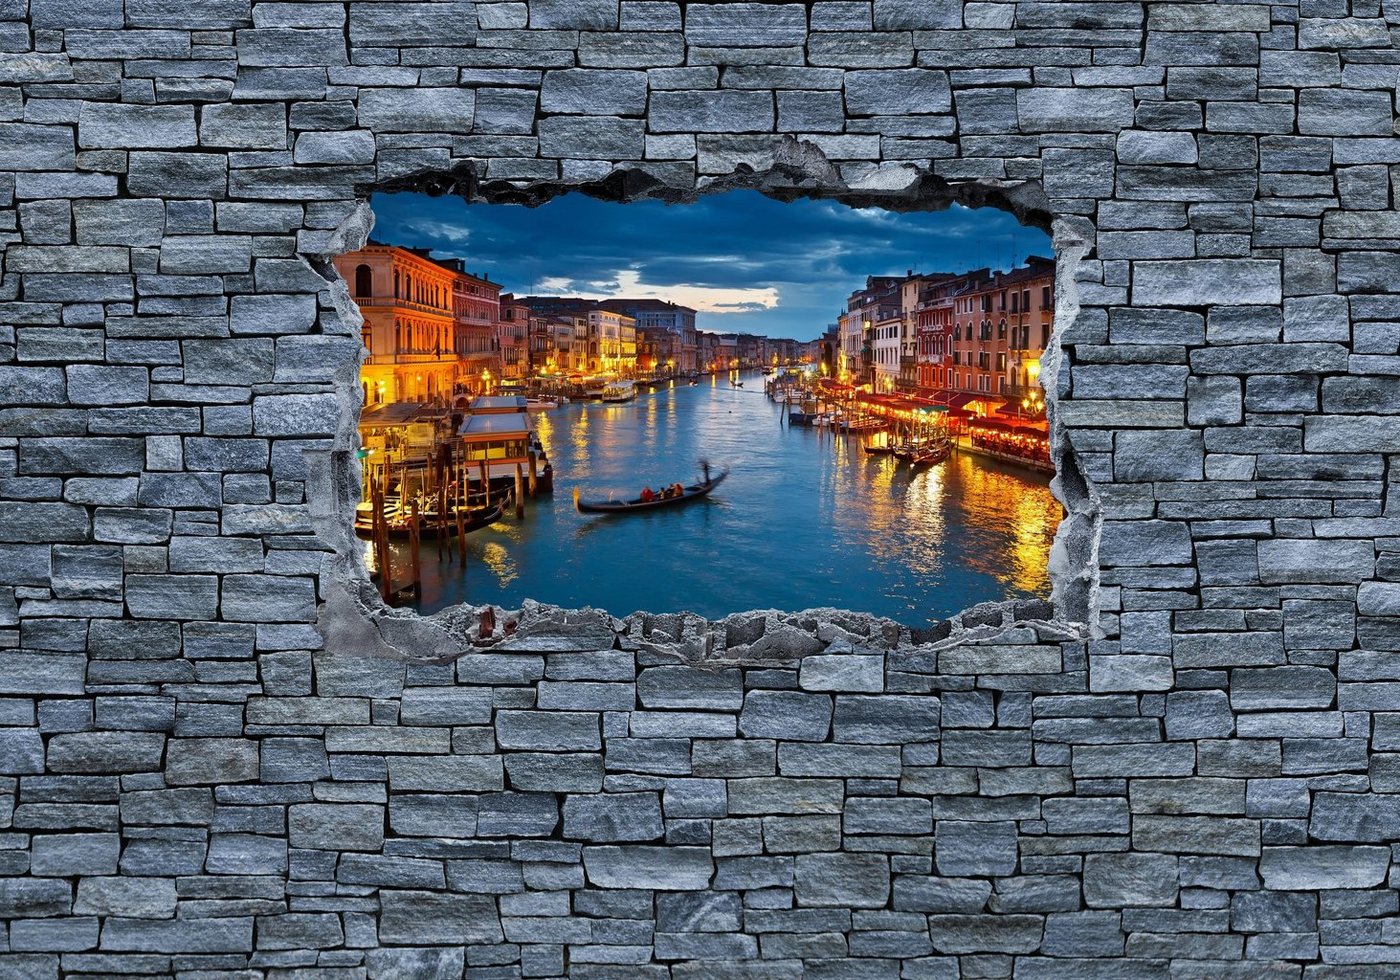 wandmotiv24 Fototapete 3D Canale Grande Venedig - Steinmauer, strukturiert, Wandtapete, Motivtapete, matt, Vinyltapete, selbstklebend von wandmotiv24